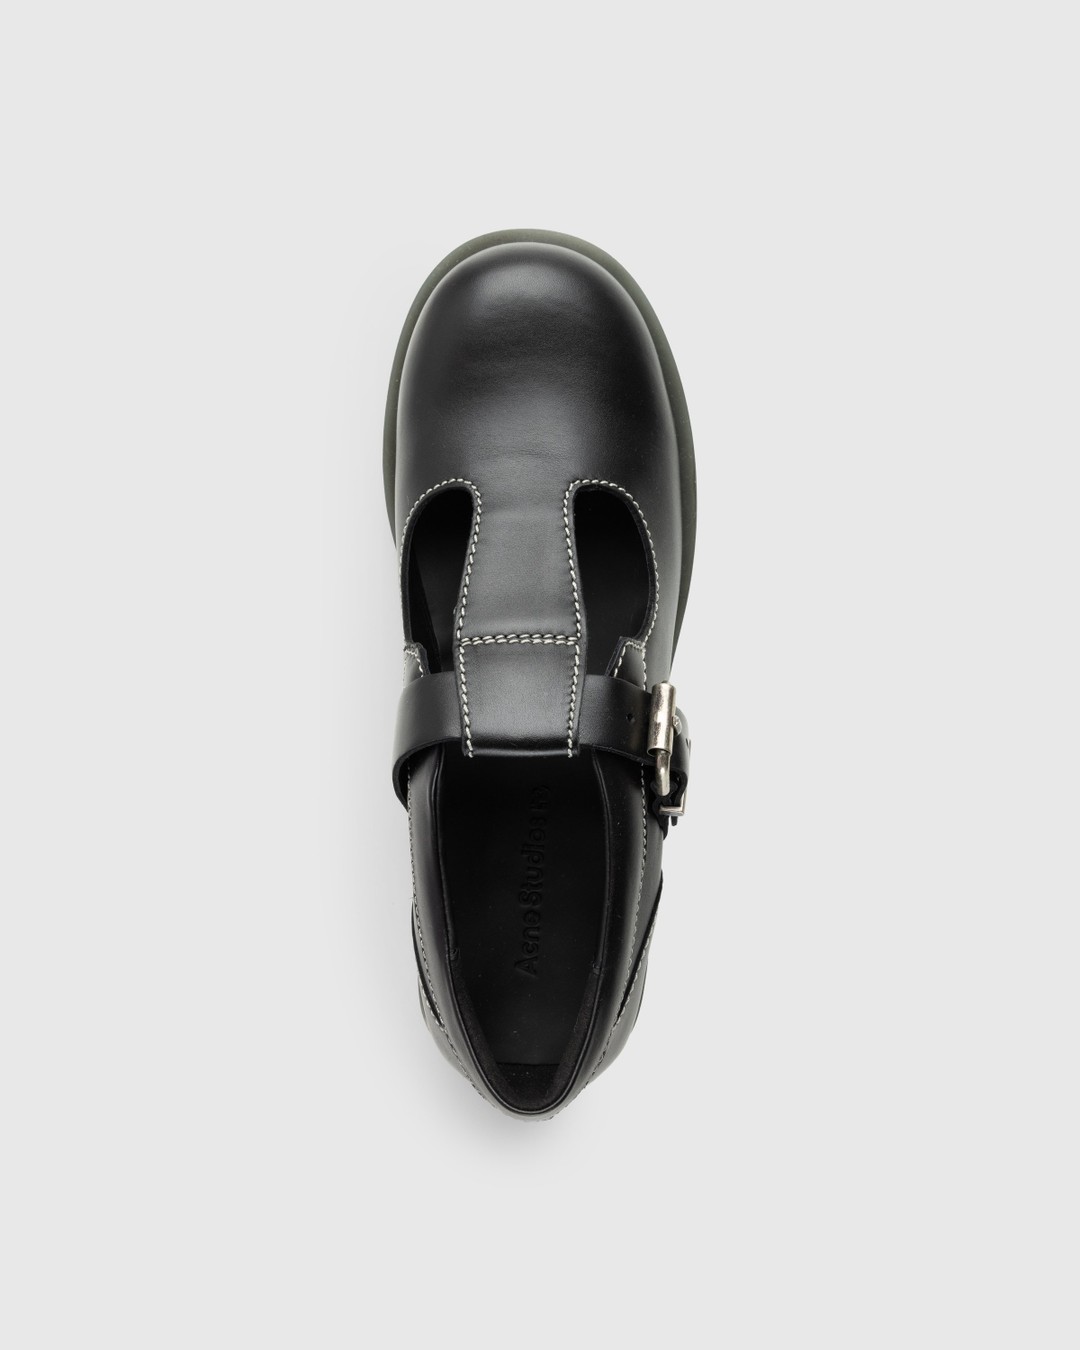 Acne Studios – Berylab Leather Buckle Shoes Black - Shoes - Black - Image 5